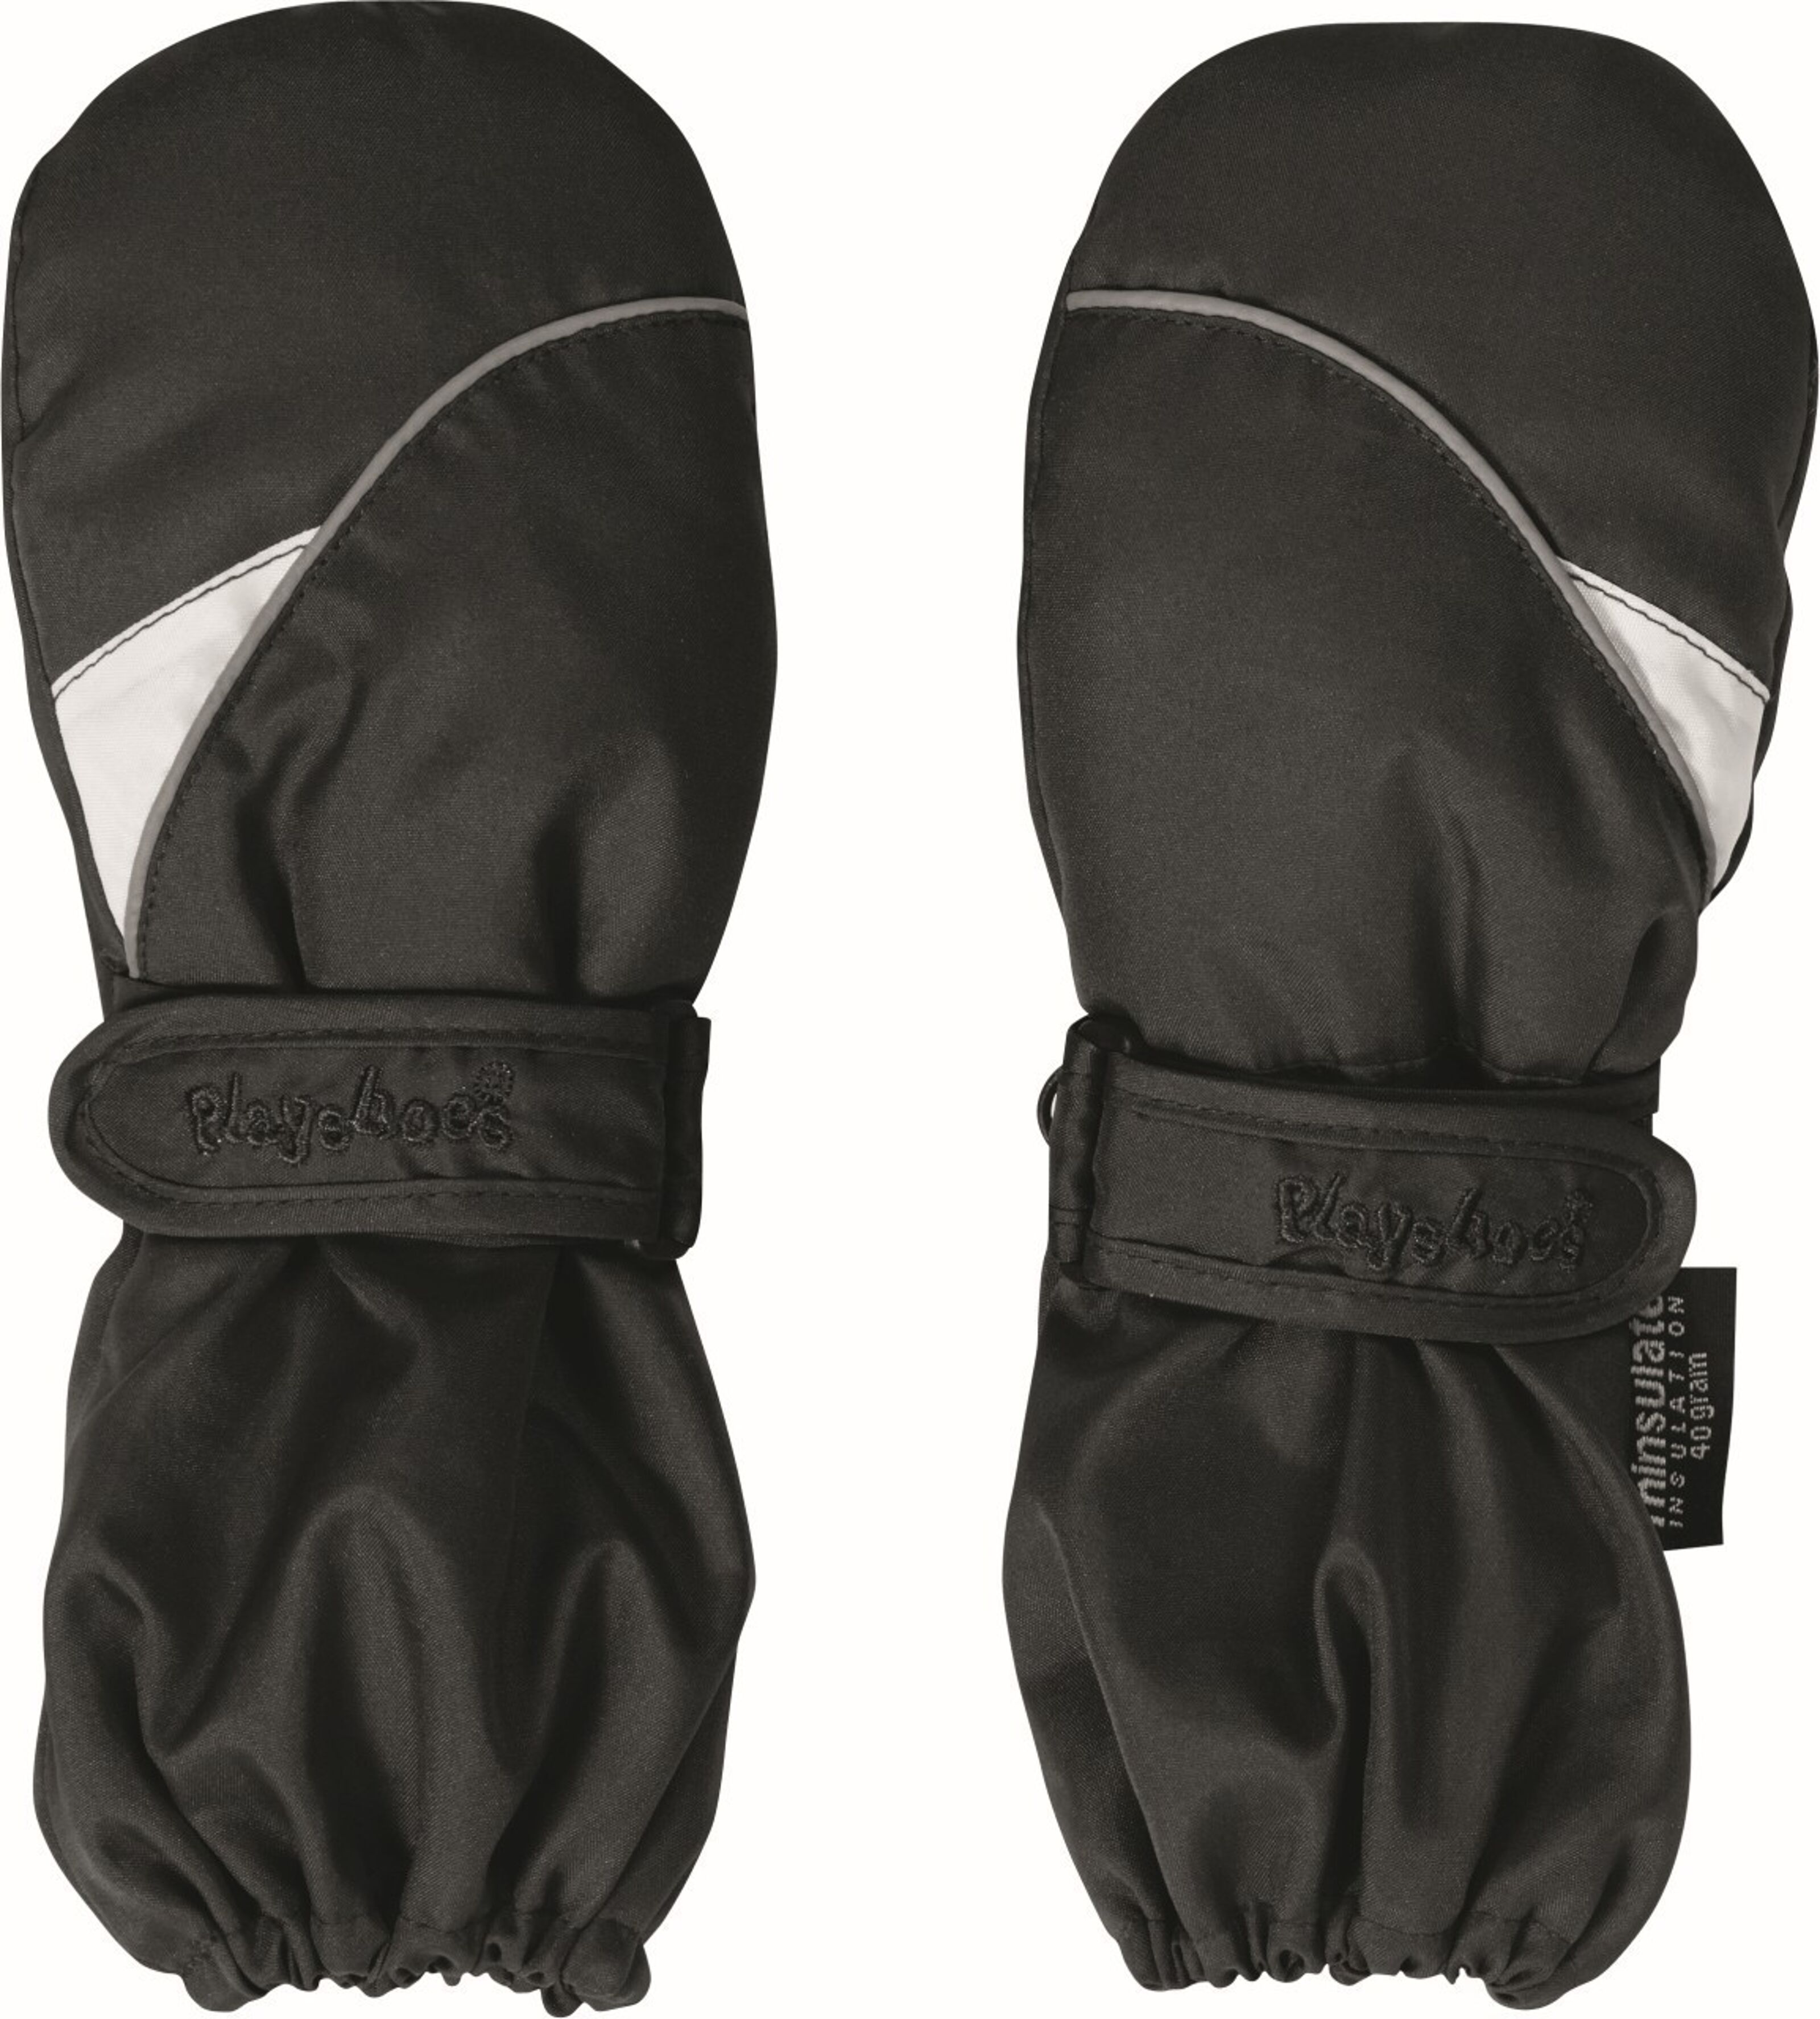 Buy wholesale Mitten -black glove